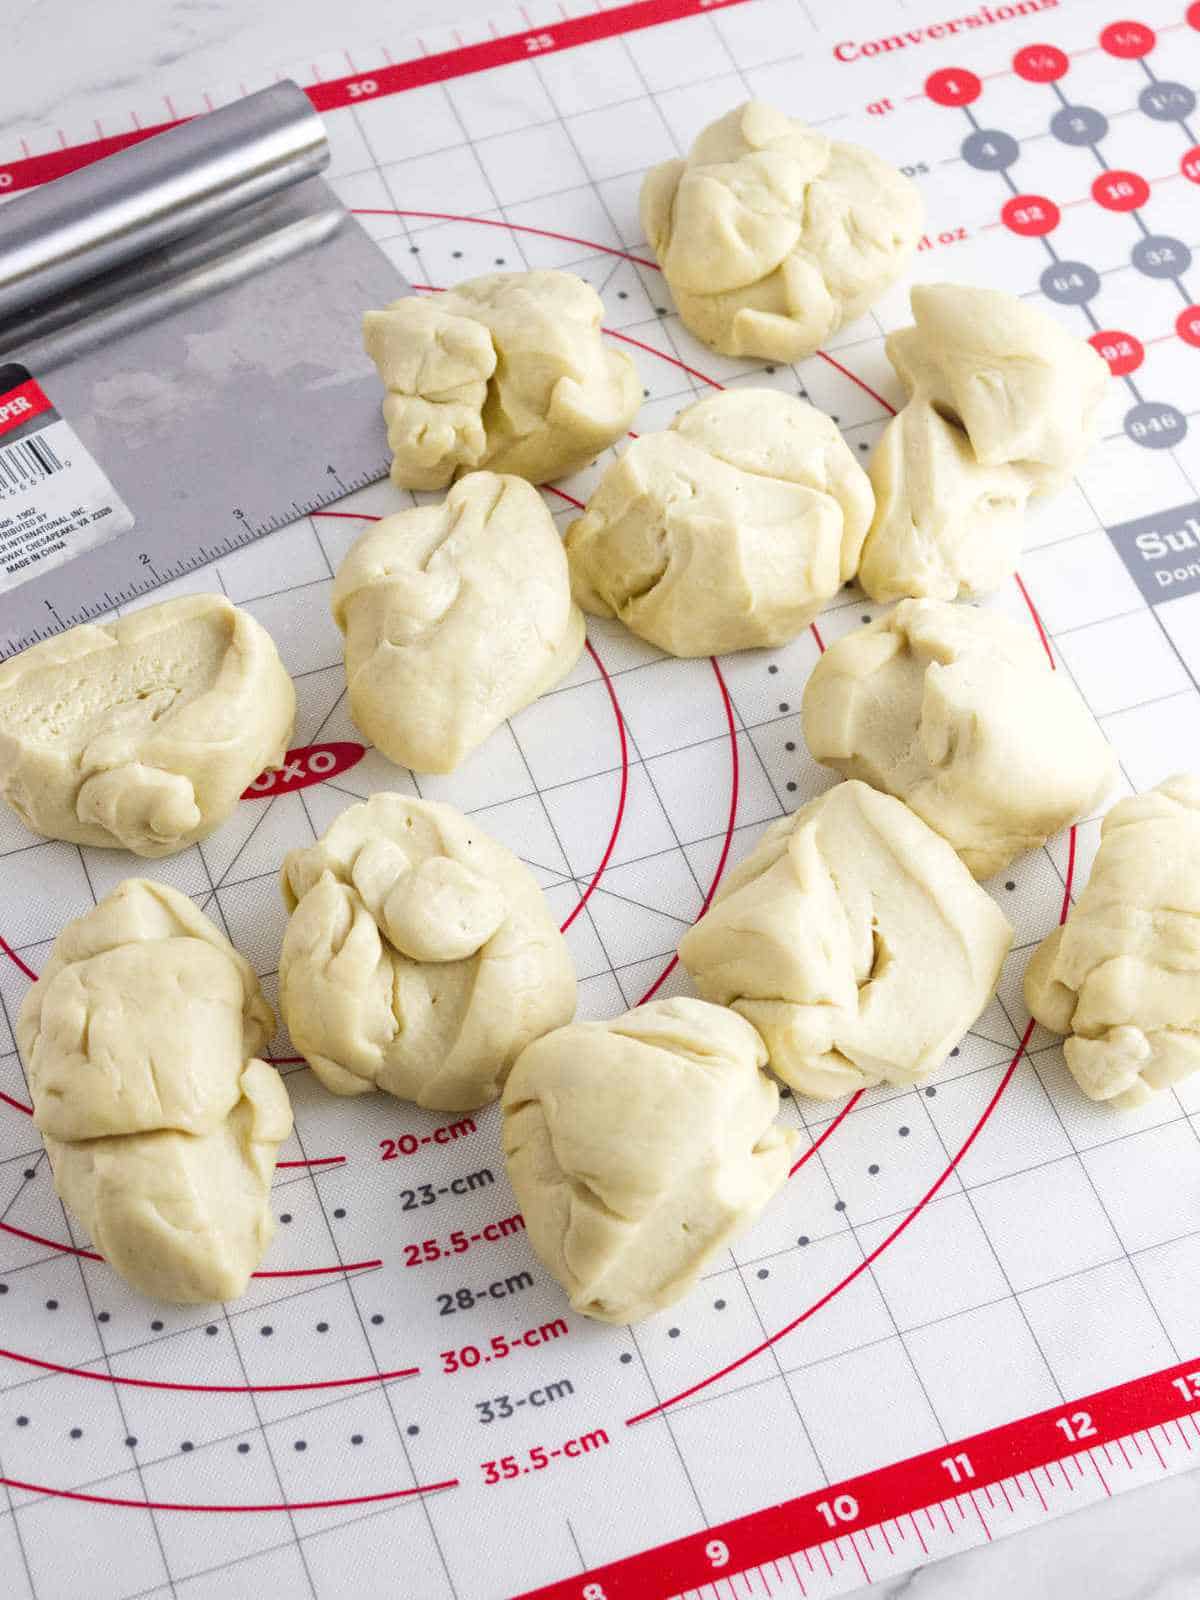 Dough cut into equal size balls.